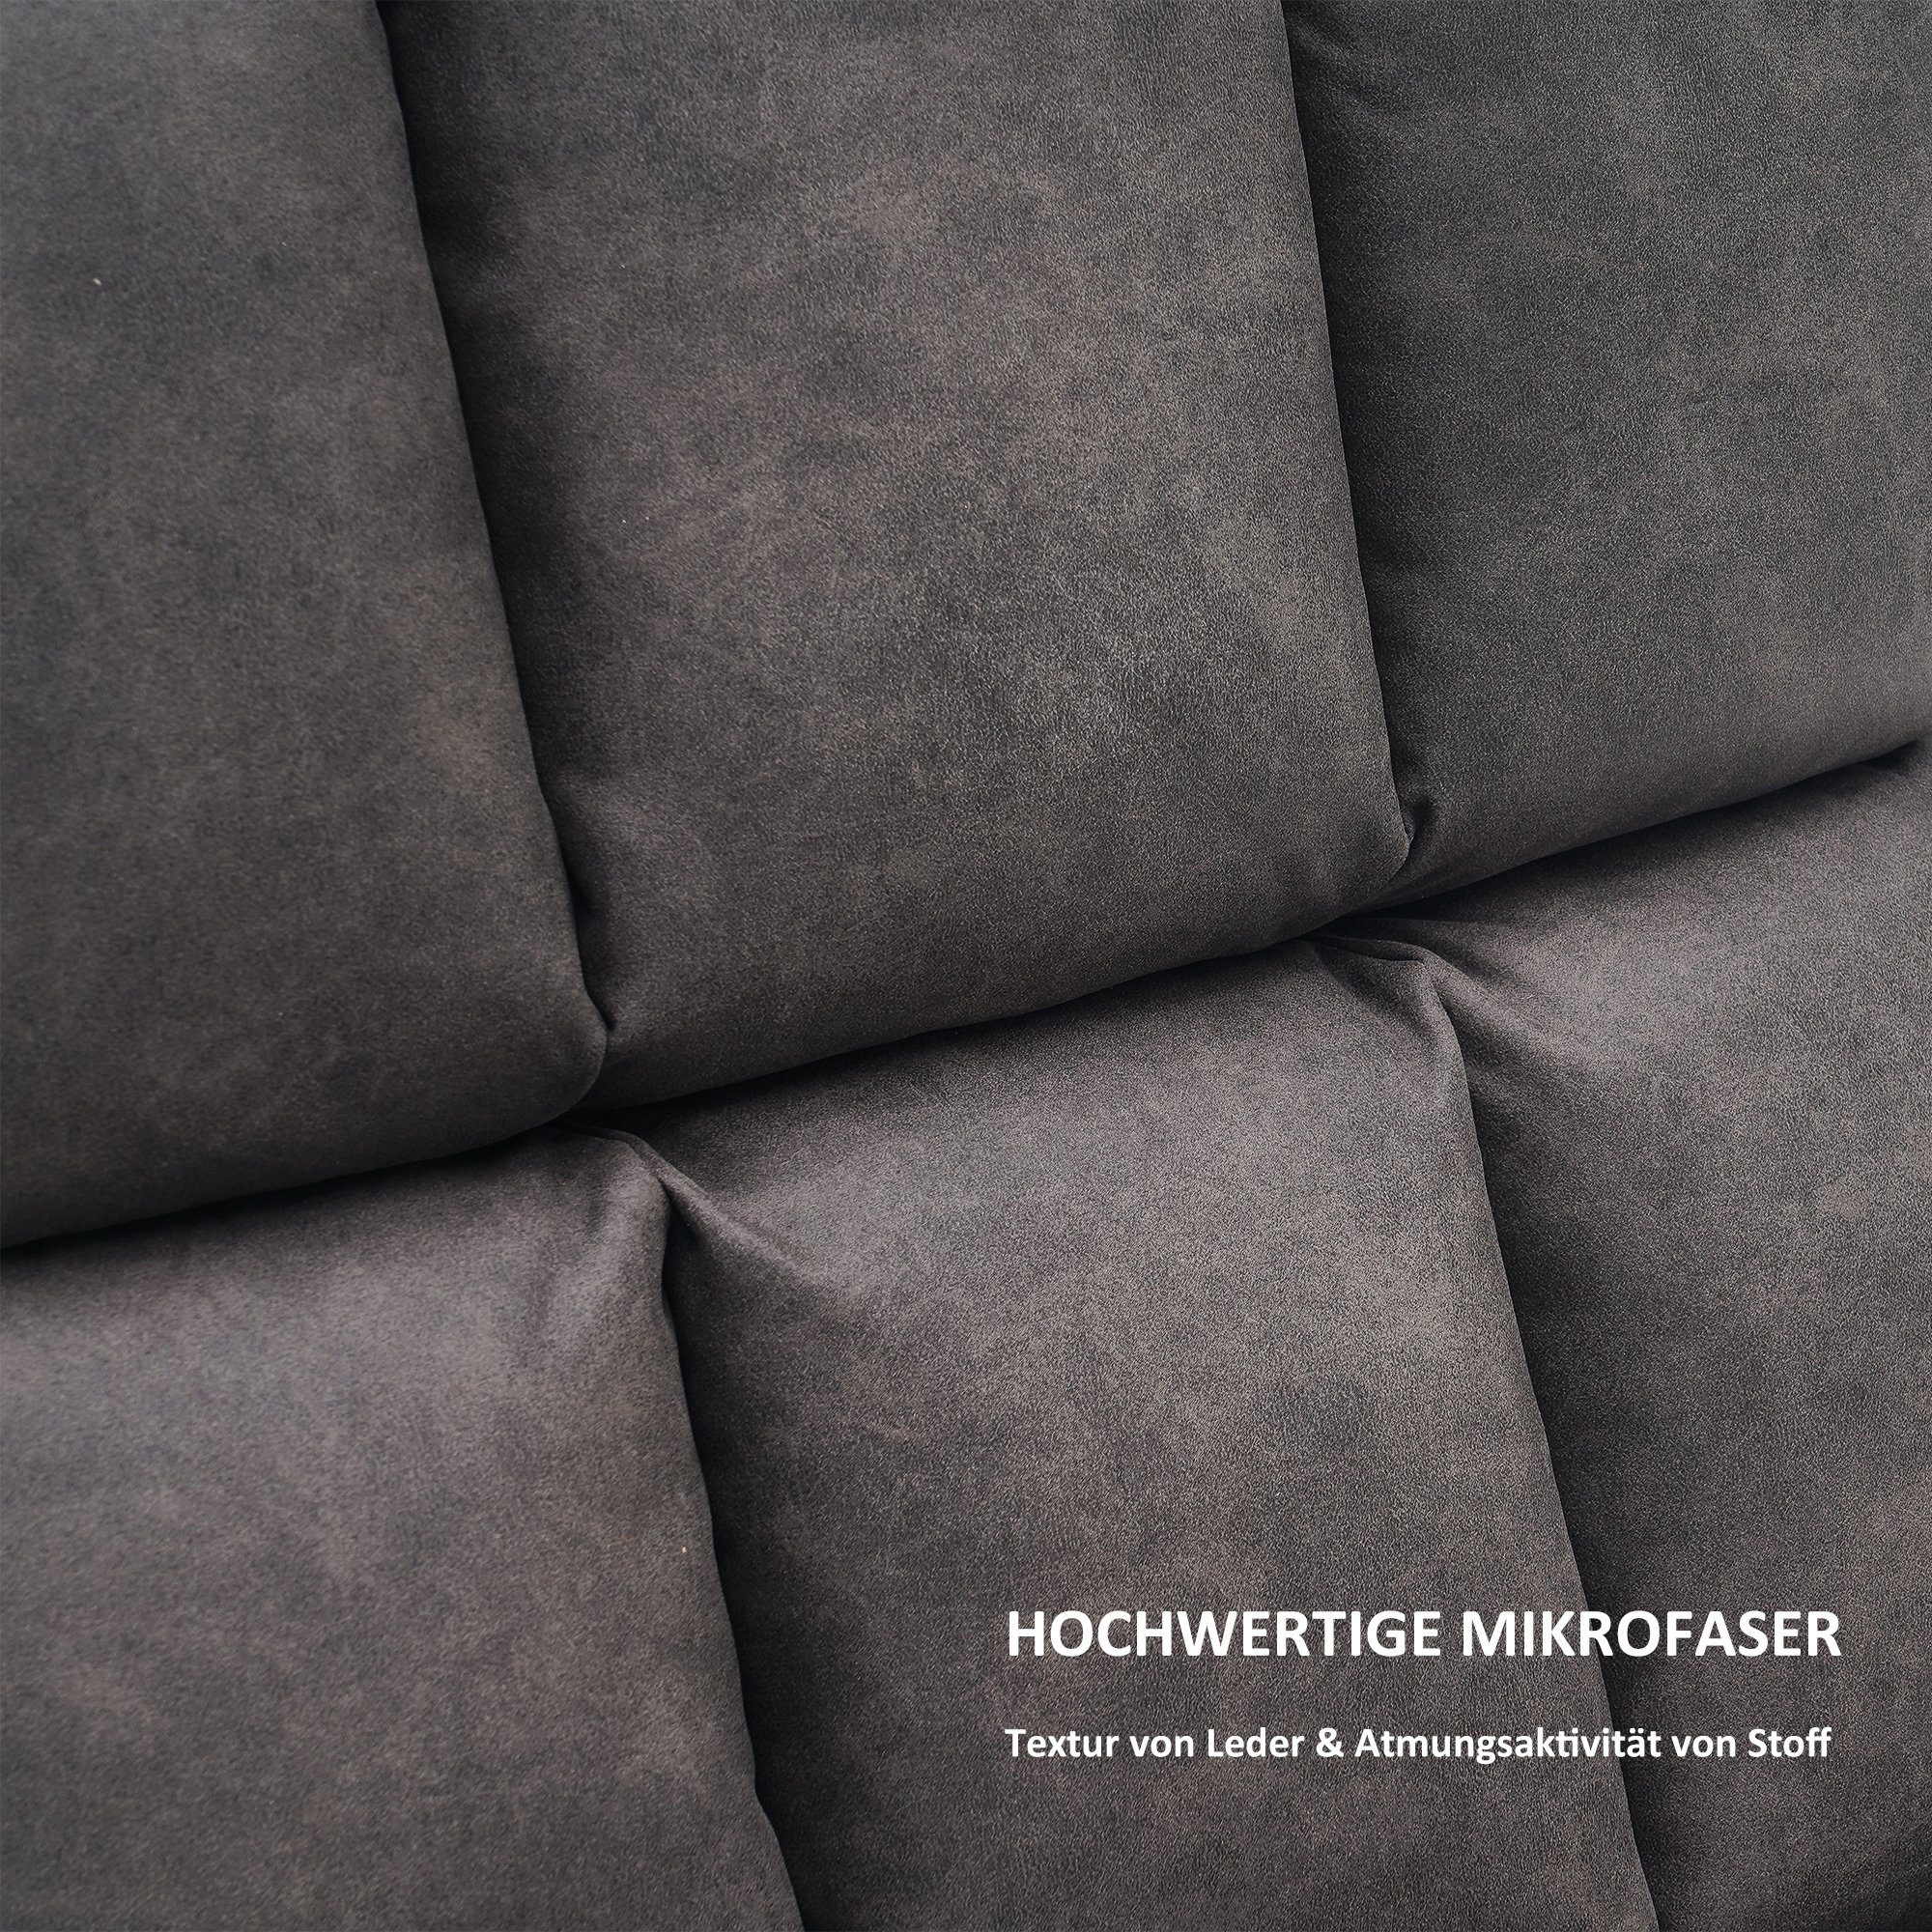 MCombo TV-Sessel MCombo Sessel mit Relaxsessel Loungesessel für moderner Fernsehsessel Stuhl / Hocker 0014 0016, Wohnzimmer